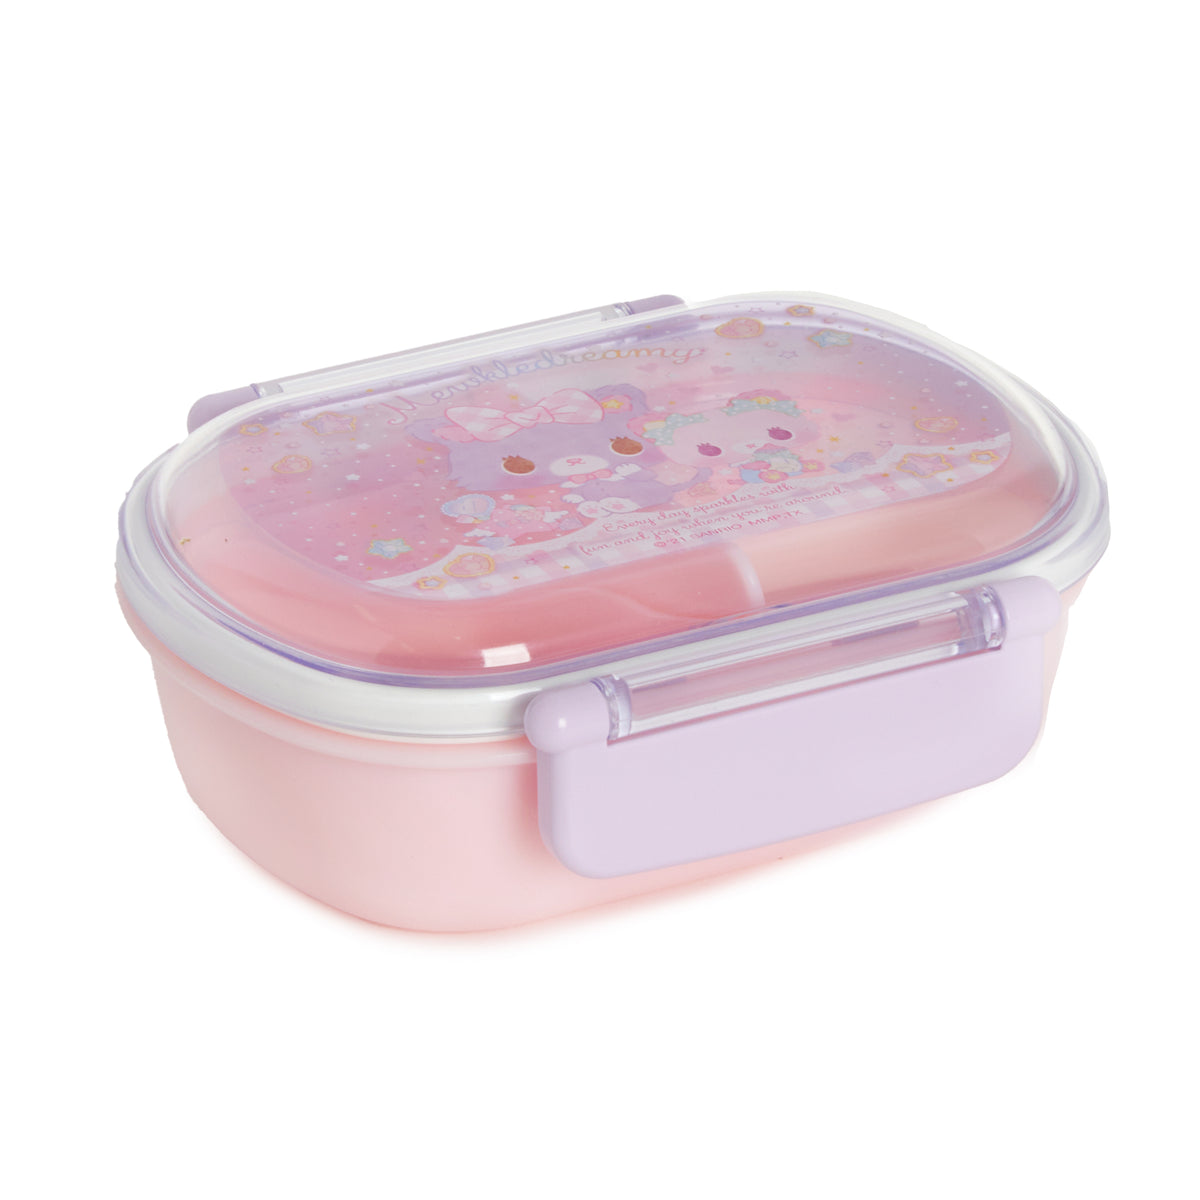 Mewkledreamy Bento Lunchbox Home Goods Japan Original   